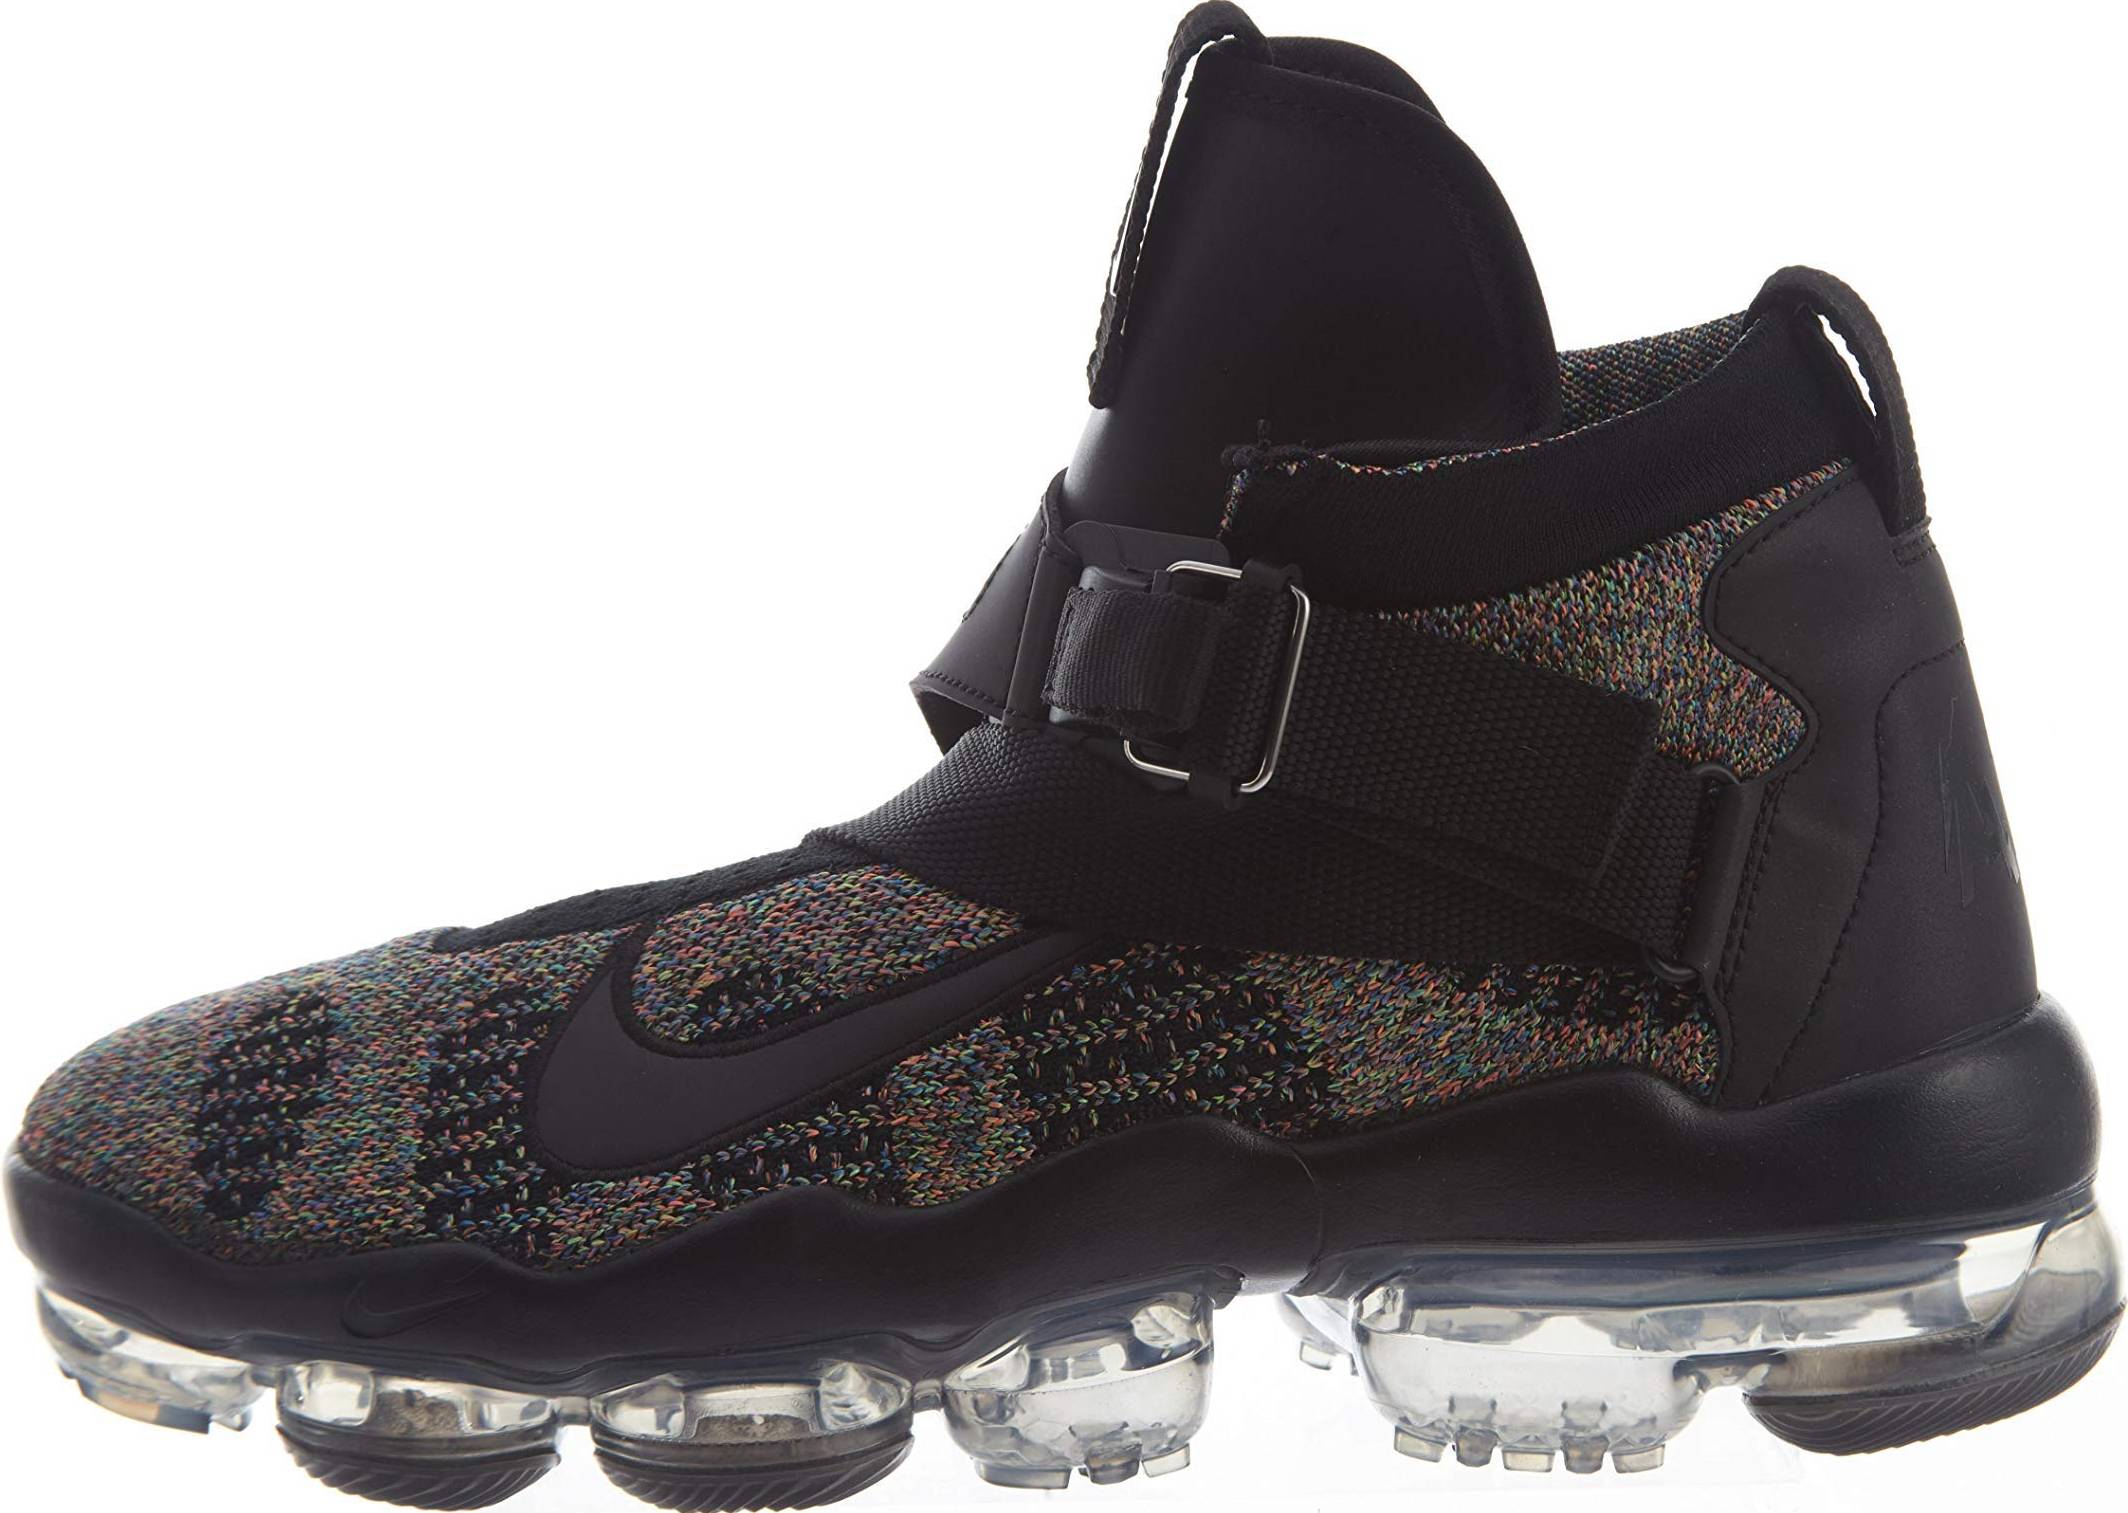 Oponerse a En otras palabras Sequía Nike Air Vapormax Premier Flyknit sneakers in black (only $199) | RunRepeat